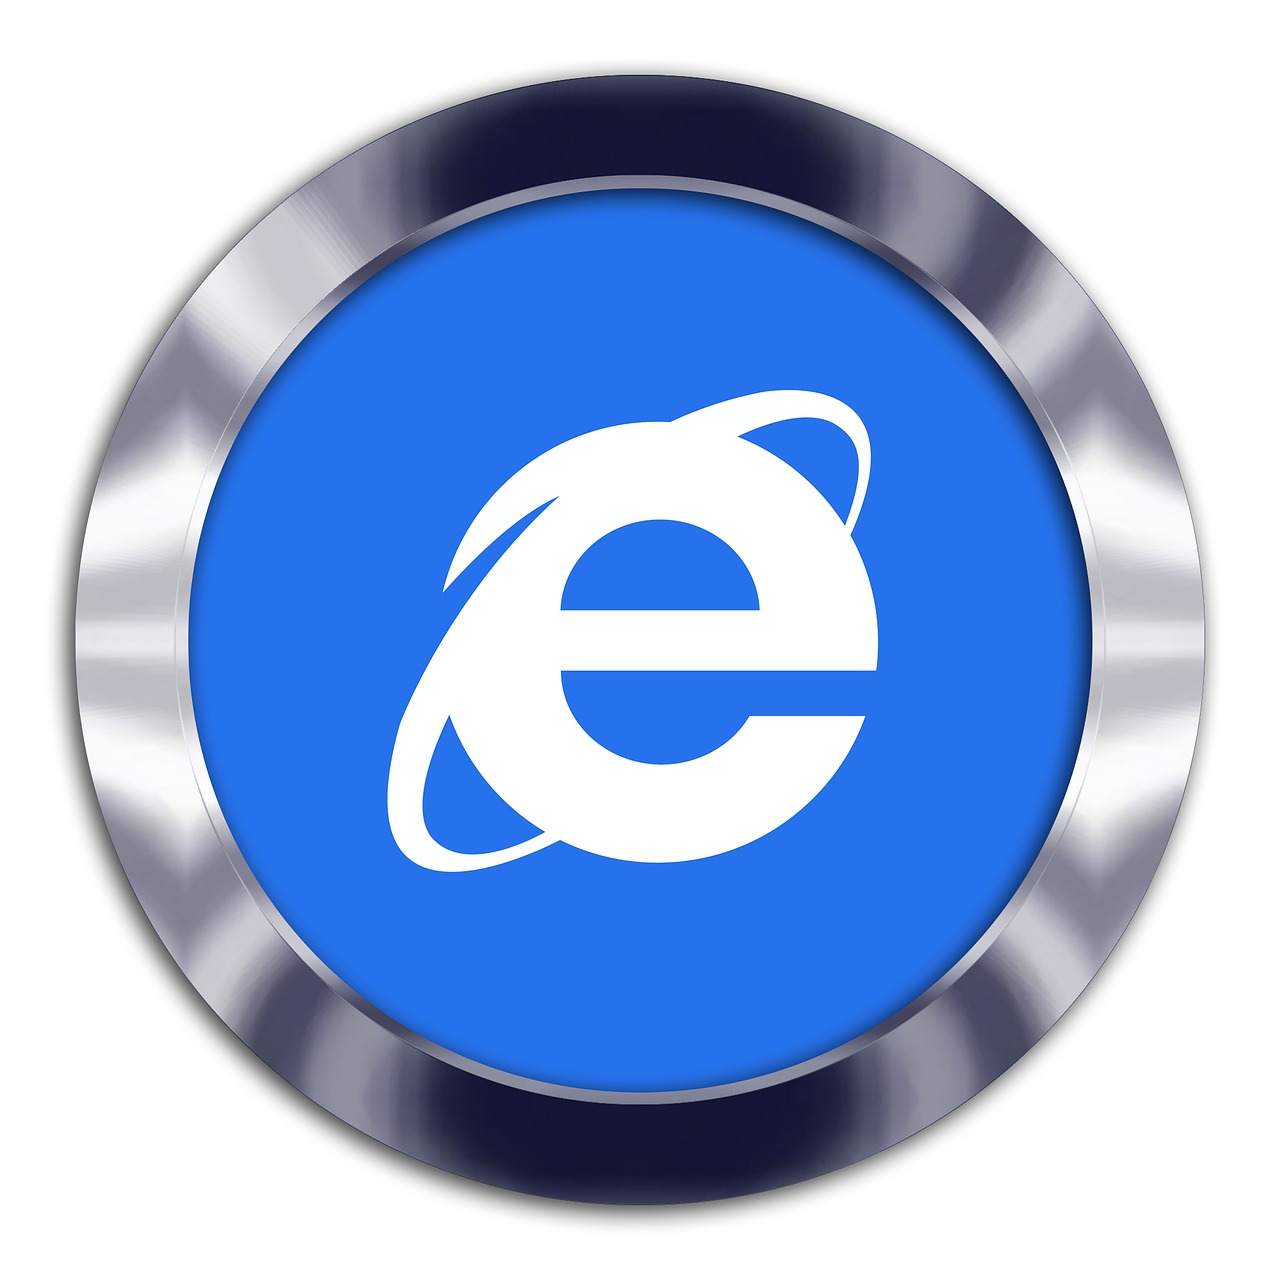 Internet Explorer, Kraštas, Naršyklė, Microsoft, Internetas, Internetas, Nemokamos Nuotraukos,  Nemokama Licenzija